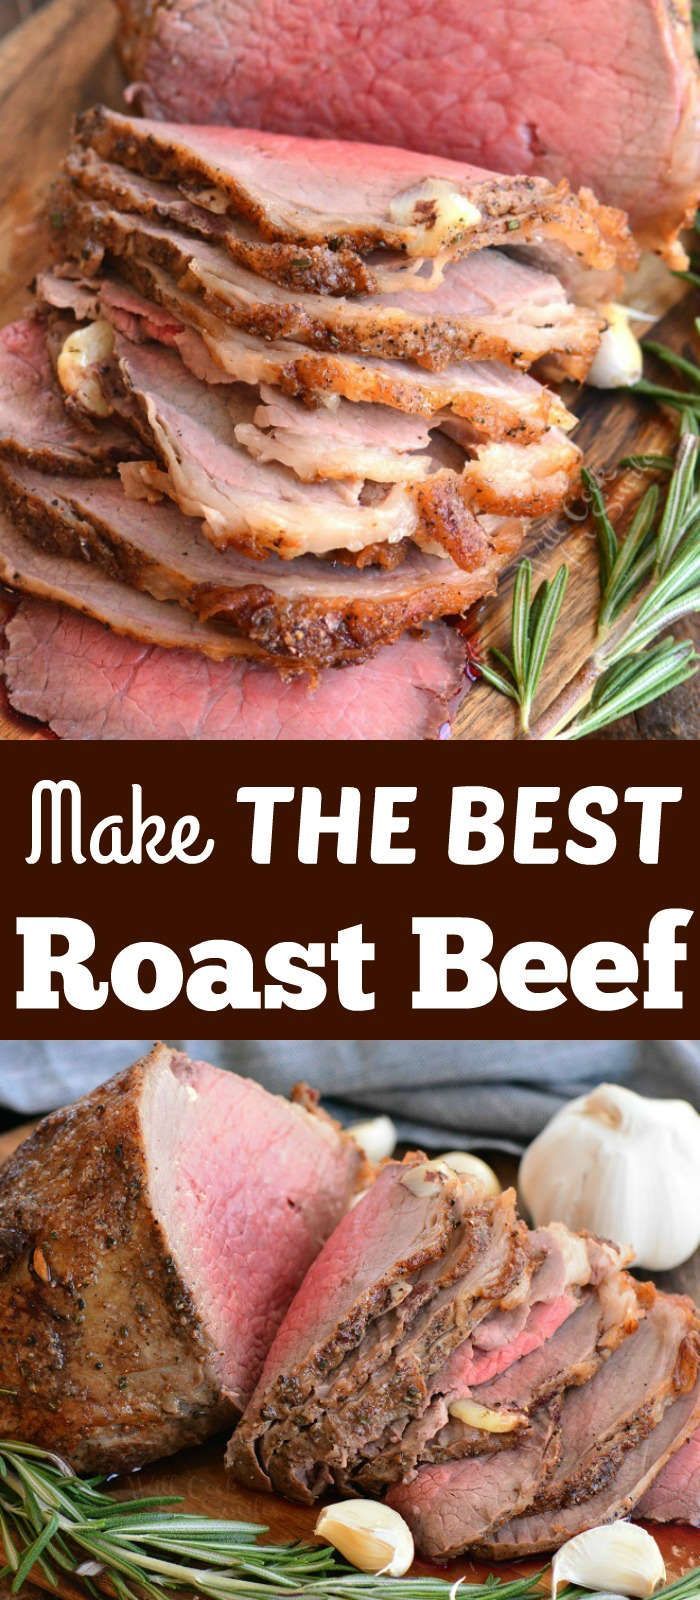 Roast Beef | Roast beef recipes, Roast beef dinner, Cooking roast beef